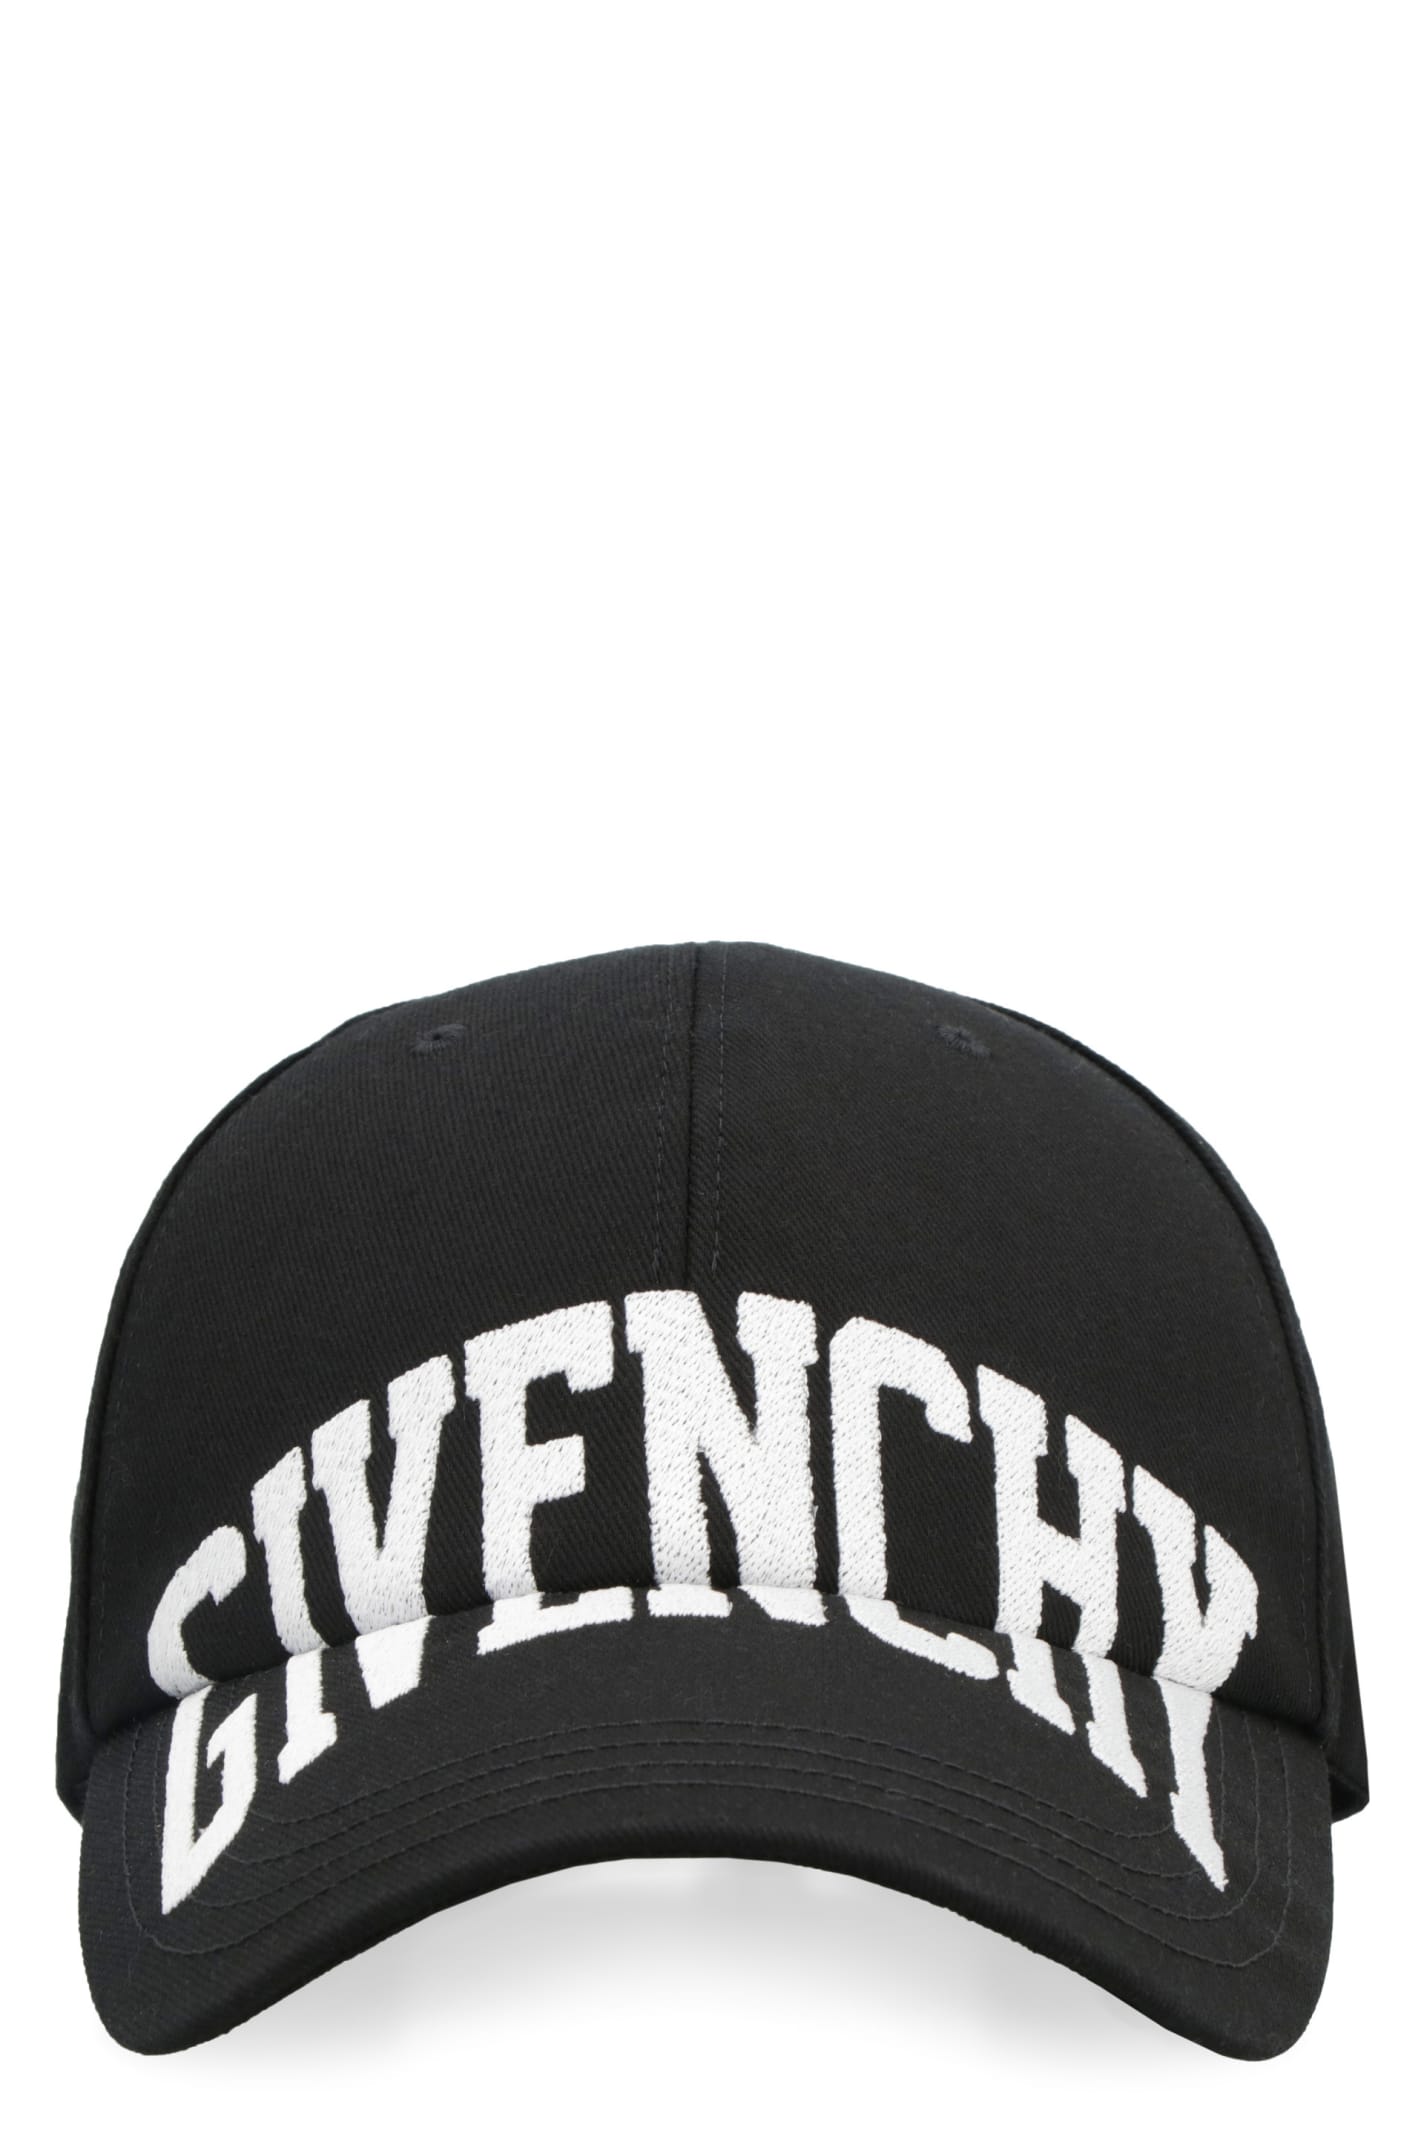 Givenchy Logo Baseball Cap In Black